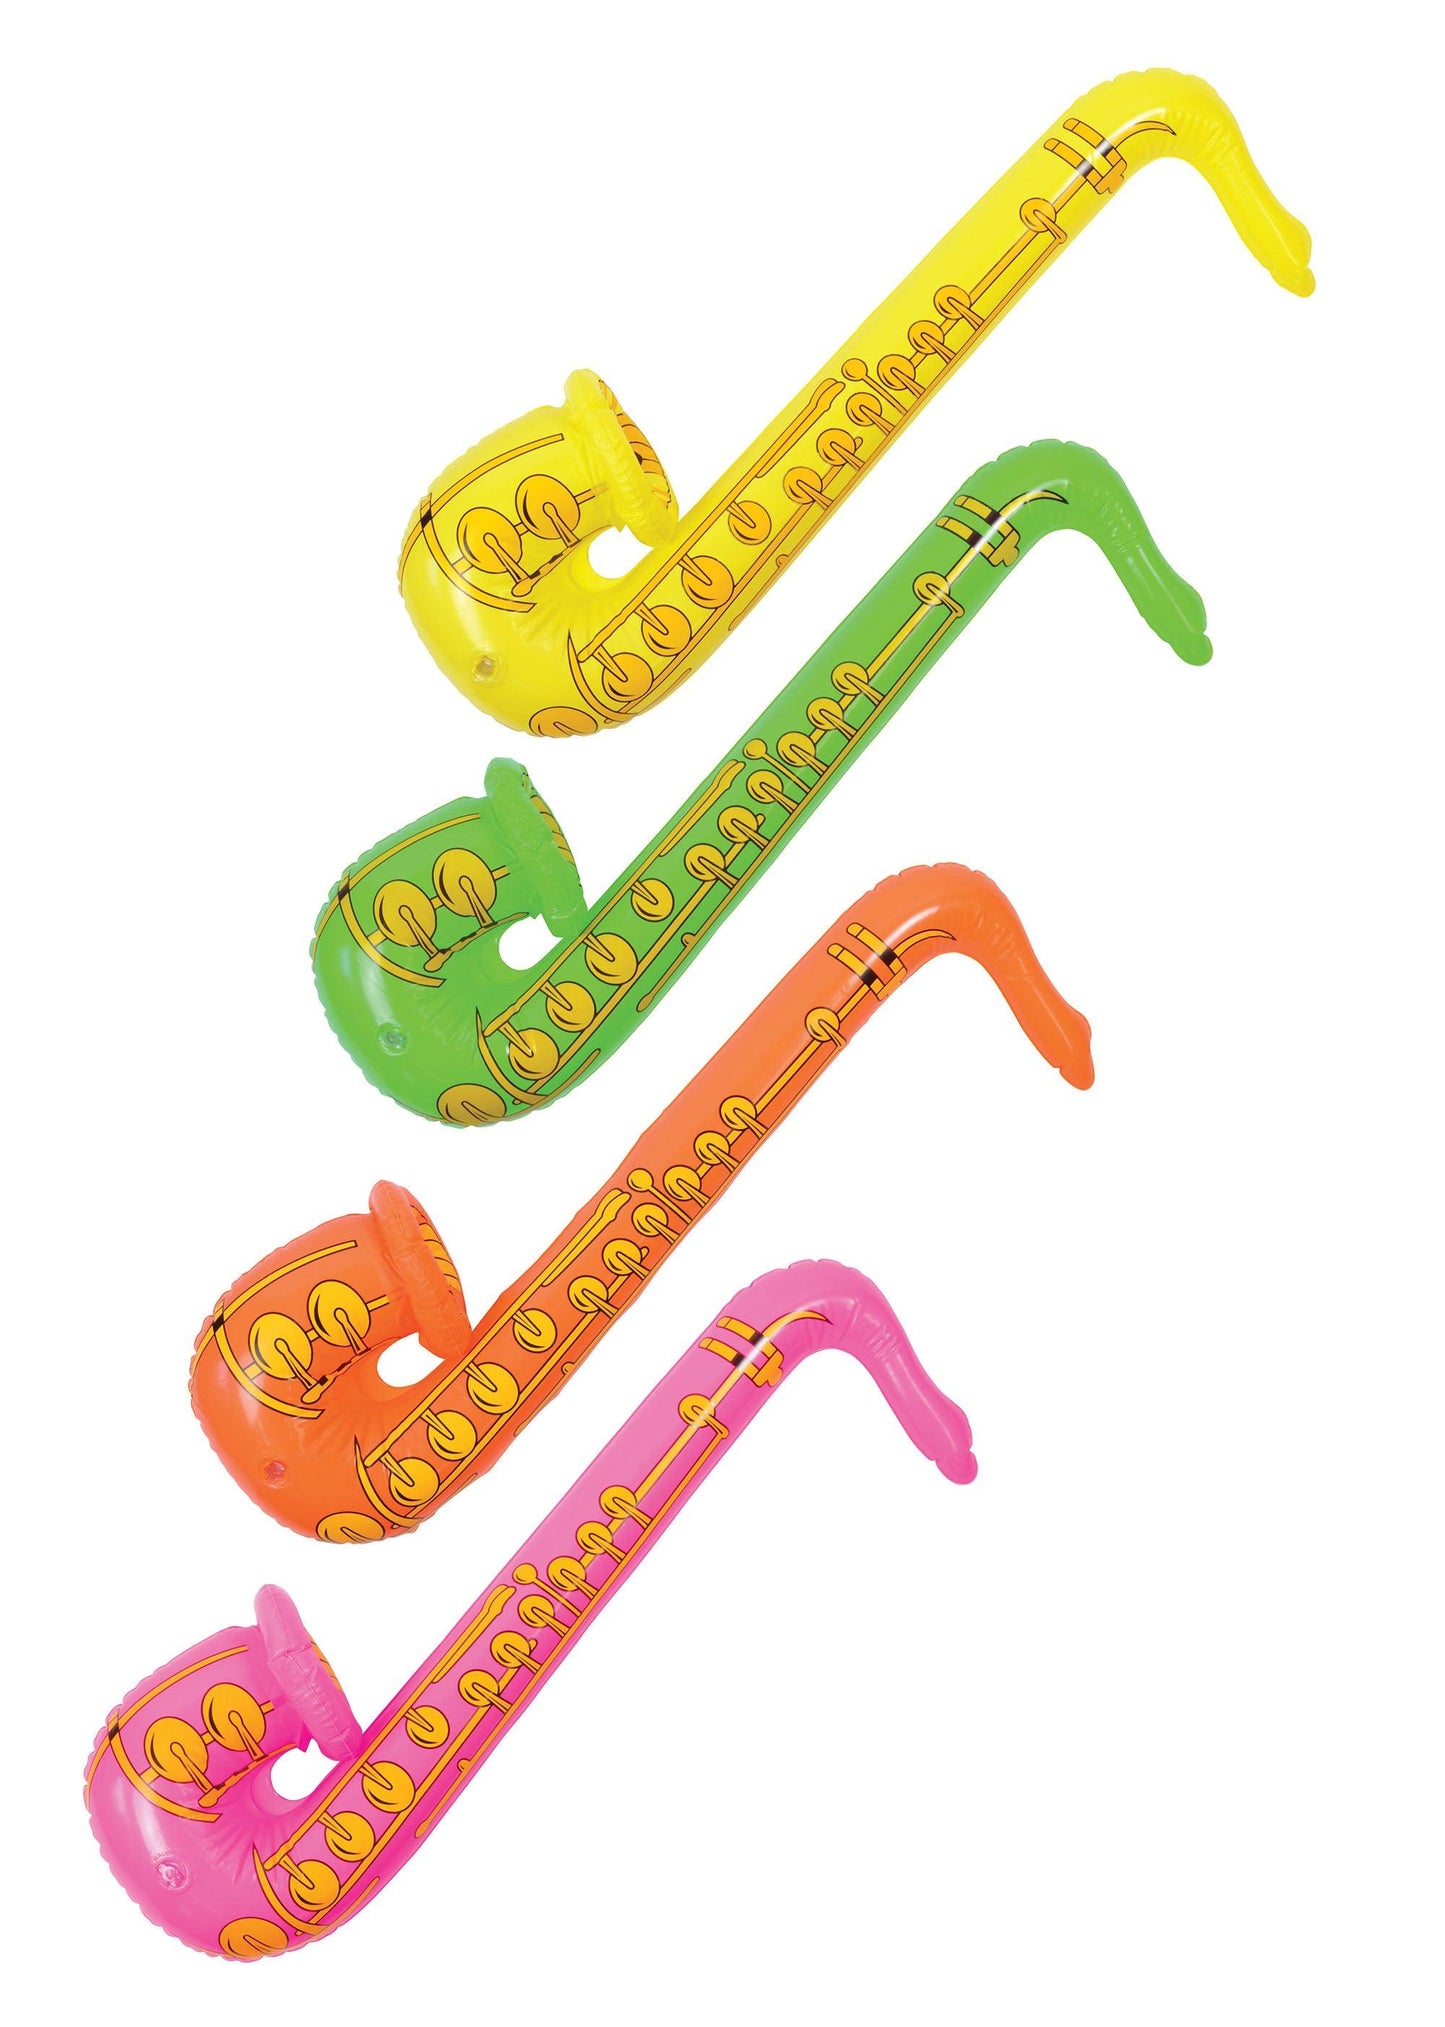 Inflatable Saxophone - Labreeze